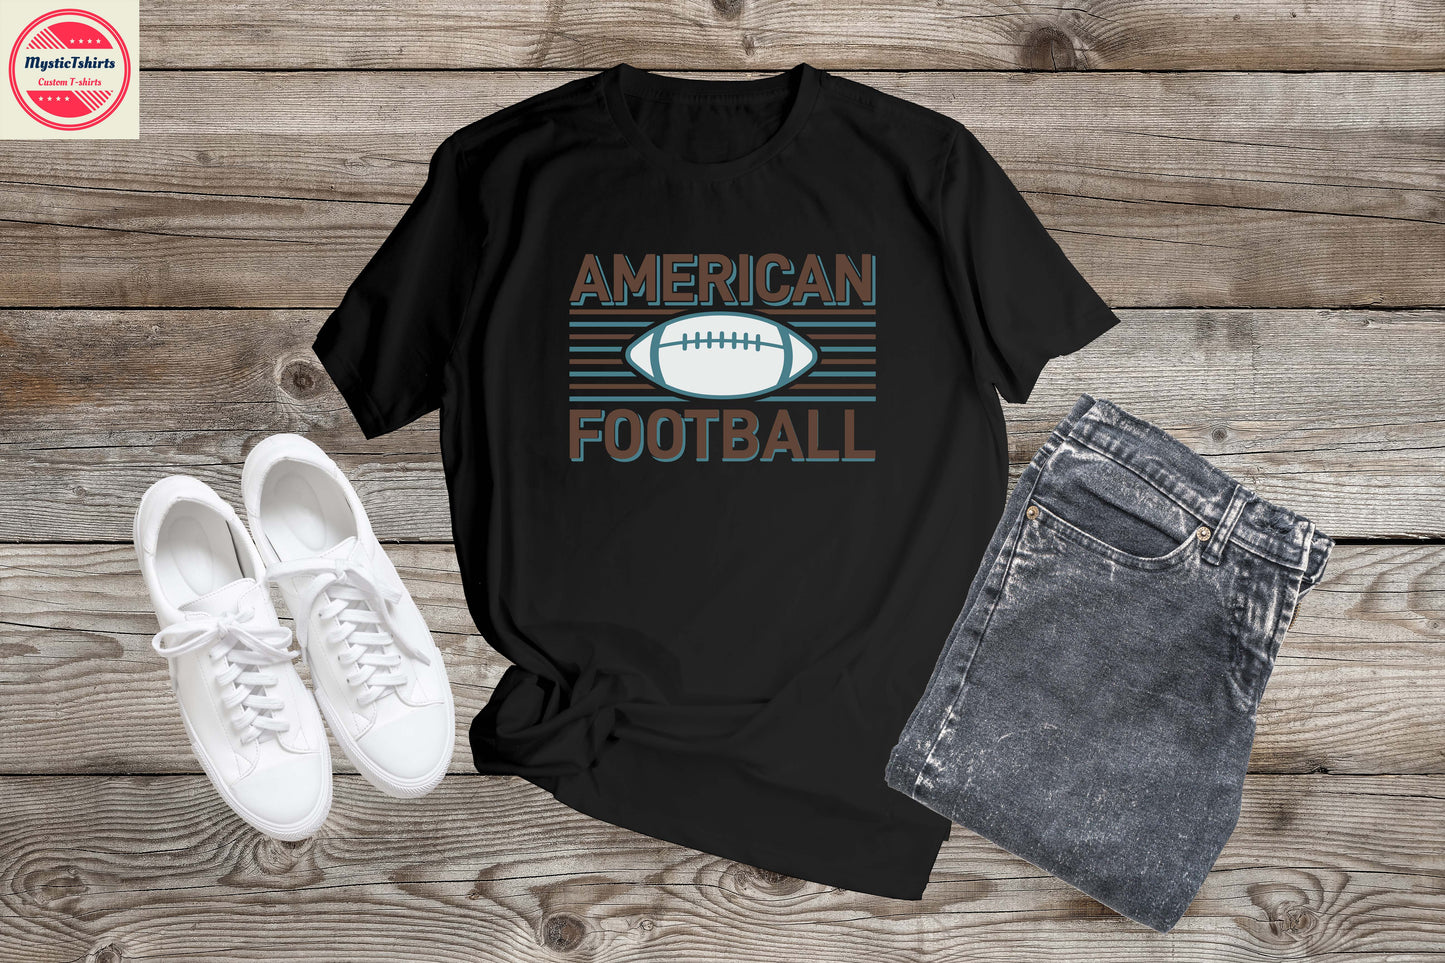 016. AMERICAN FOOTBALL, Custom Made Shirt, Personalized T-Shirt, Custom Text, Make Your Own Shirt, Custom Tee